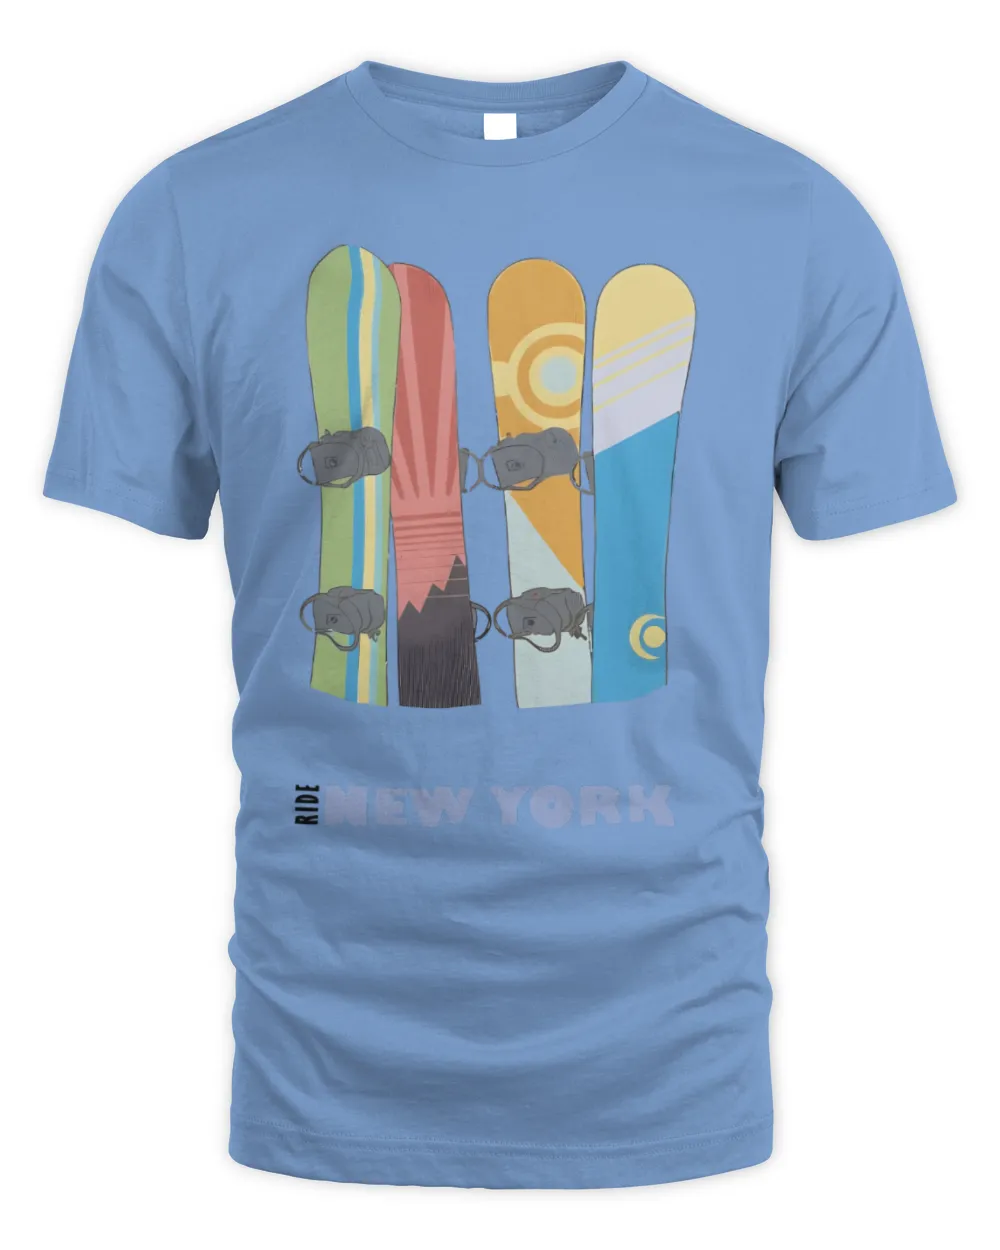 New York Snowboard T-Shirt, Skiing Hoodie, Skier Sweatshirt, Winter Sports Tee, Alpes Ski Top, Snowboarding Shirt, Snowboard Tee, Mountain Dad Gift